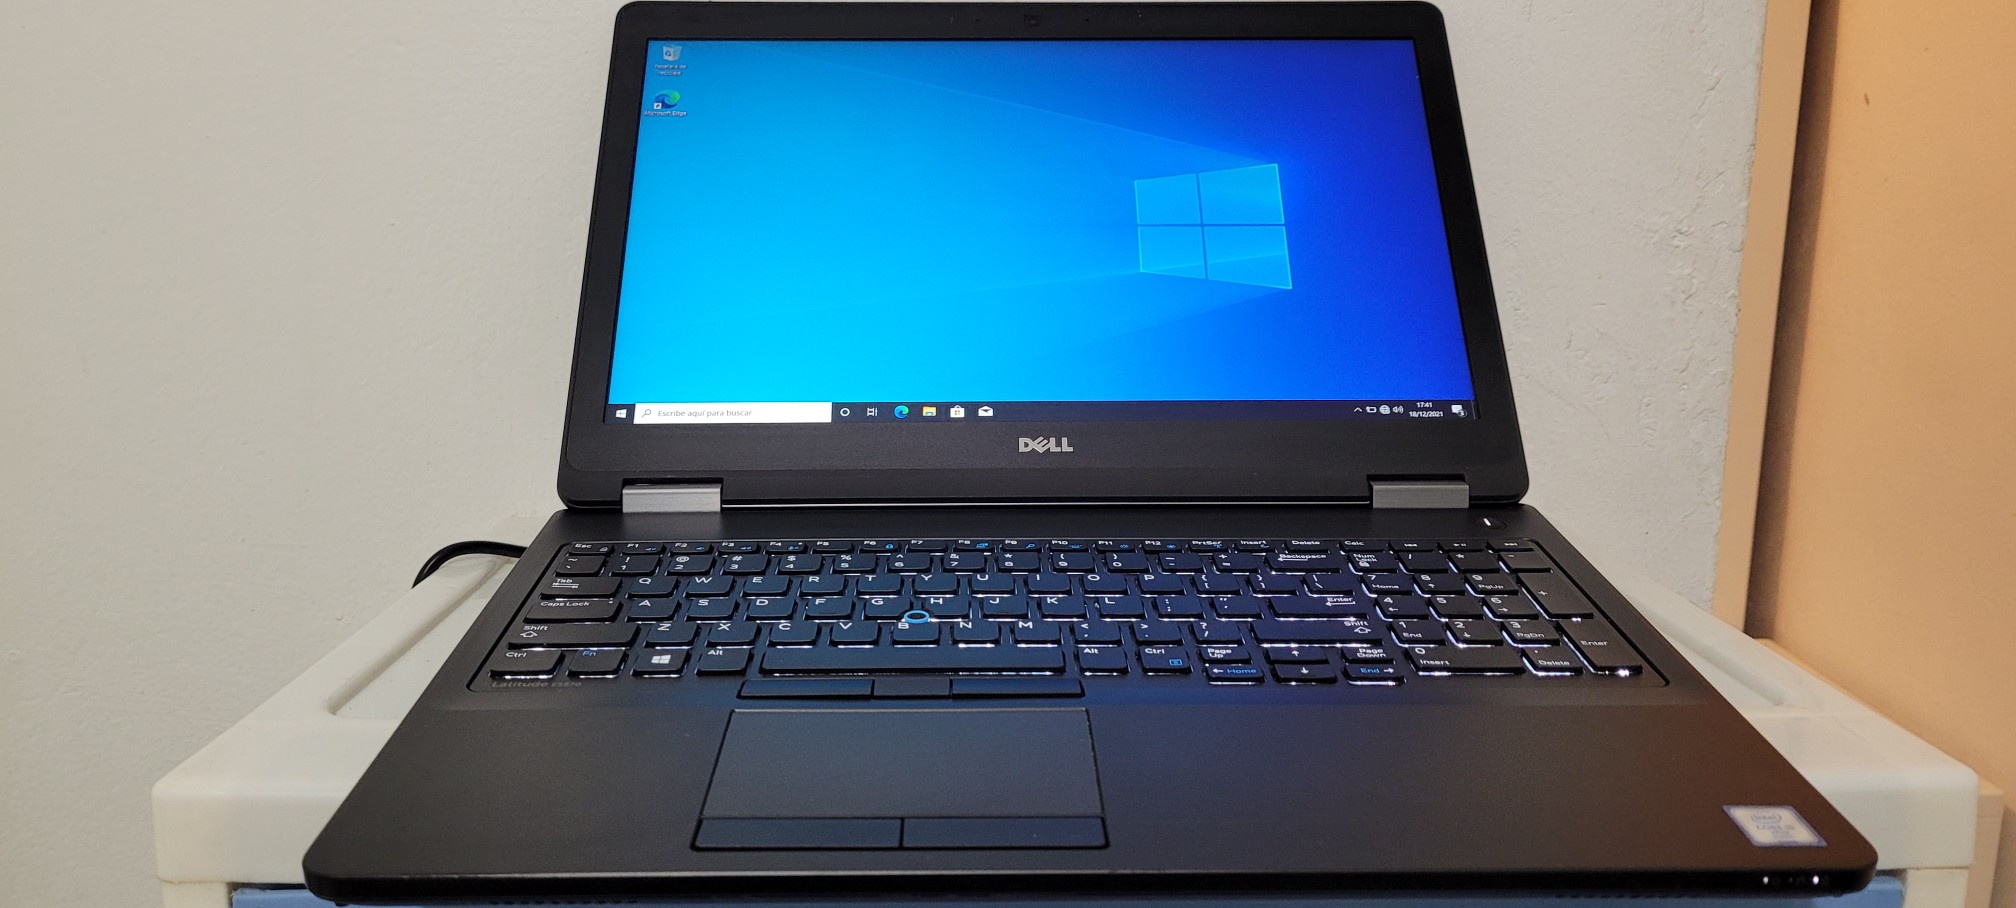 computadoras y laptops - Laptop Dell 5570 17 Pulg Core i7 6ta Ram 16gb ddr4 Disco 256gb SSD Video 8gb